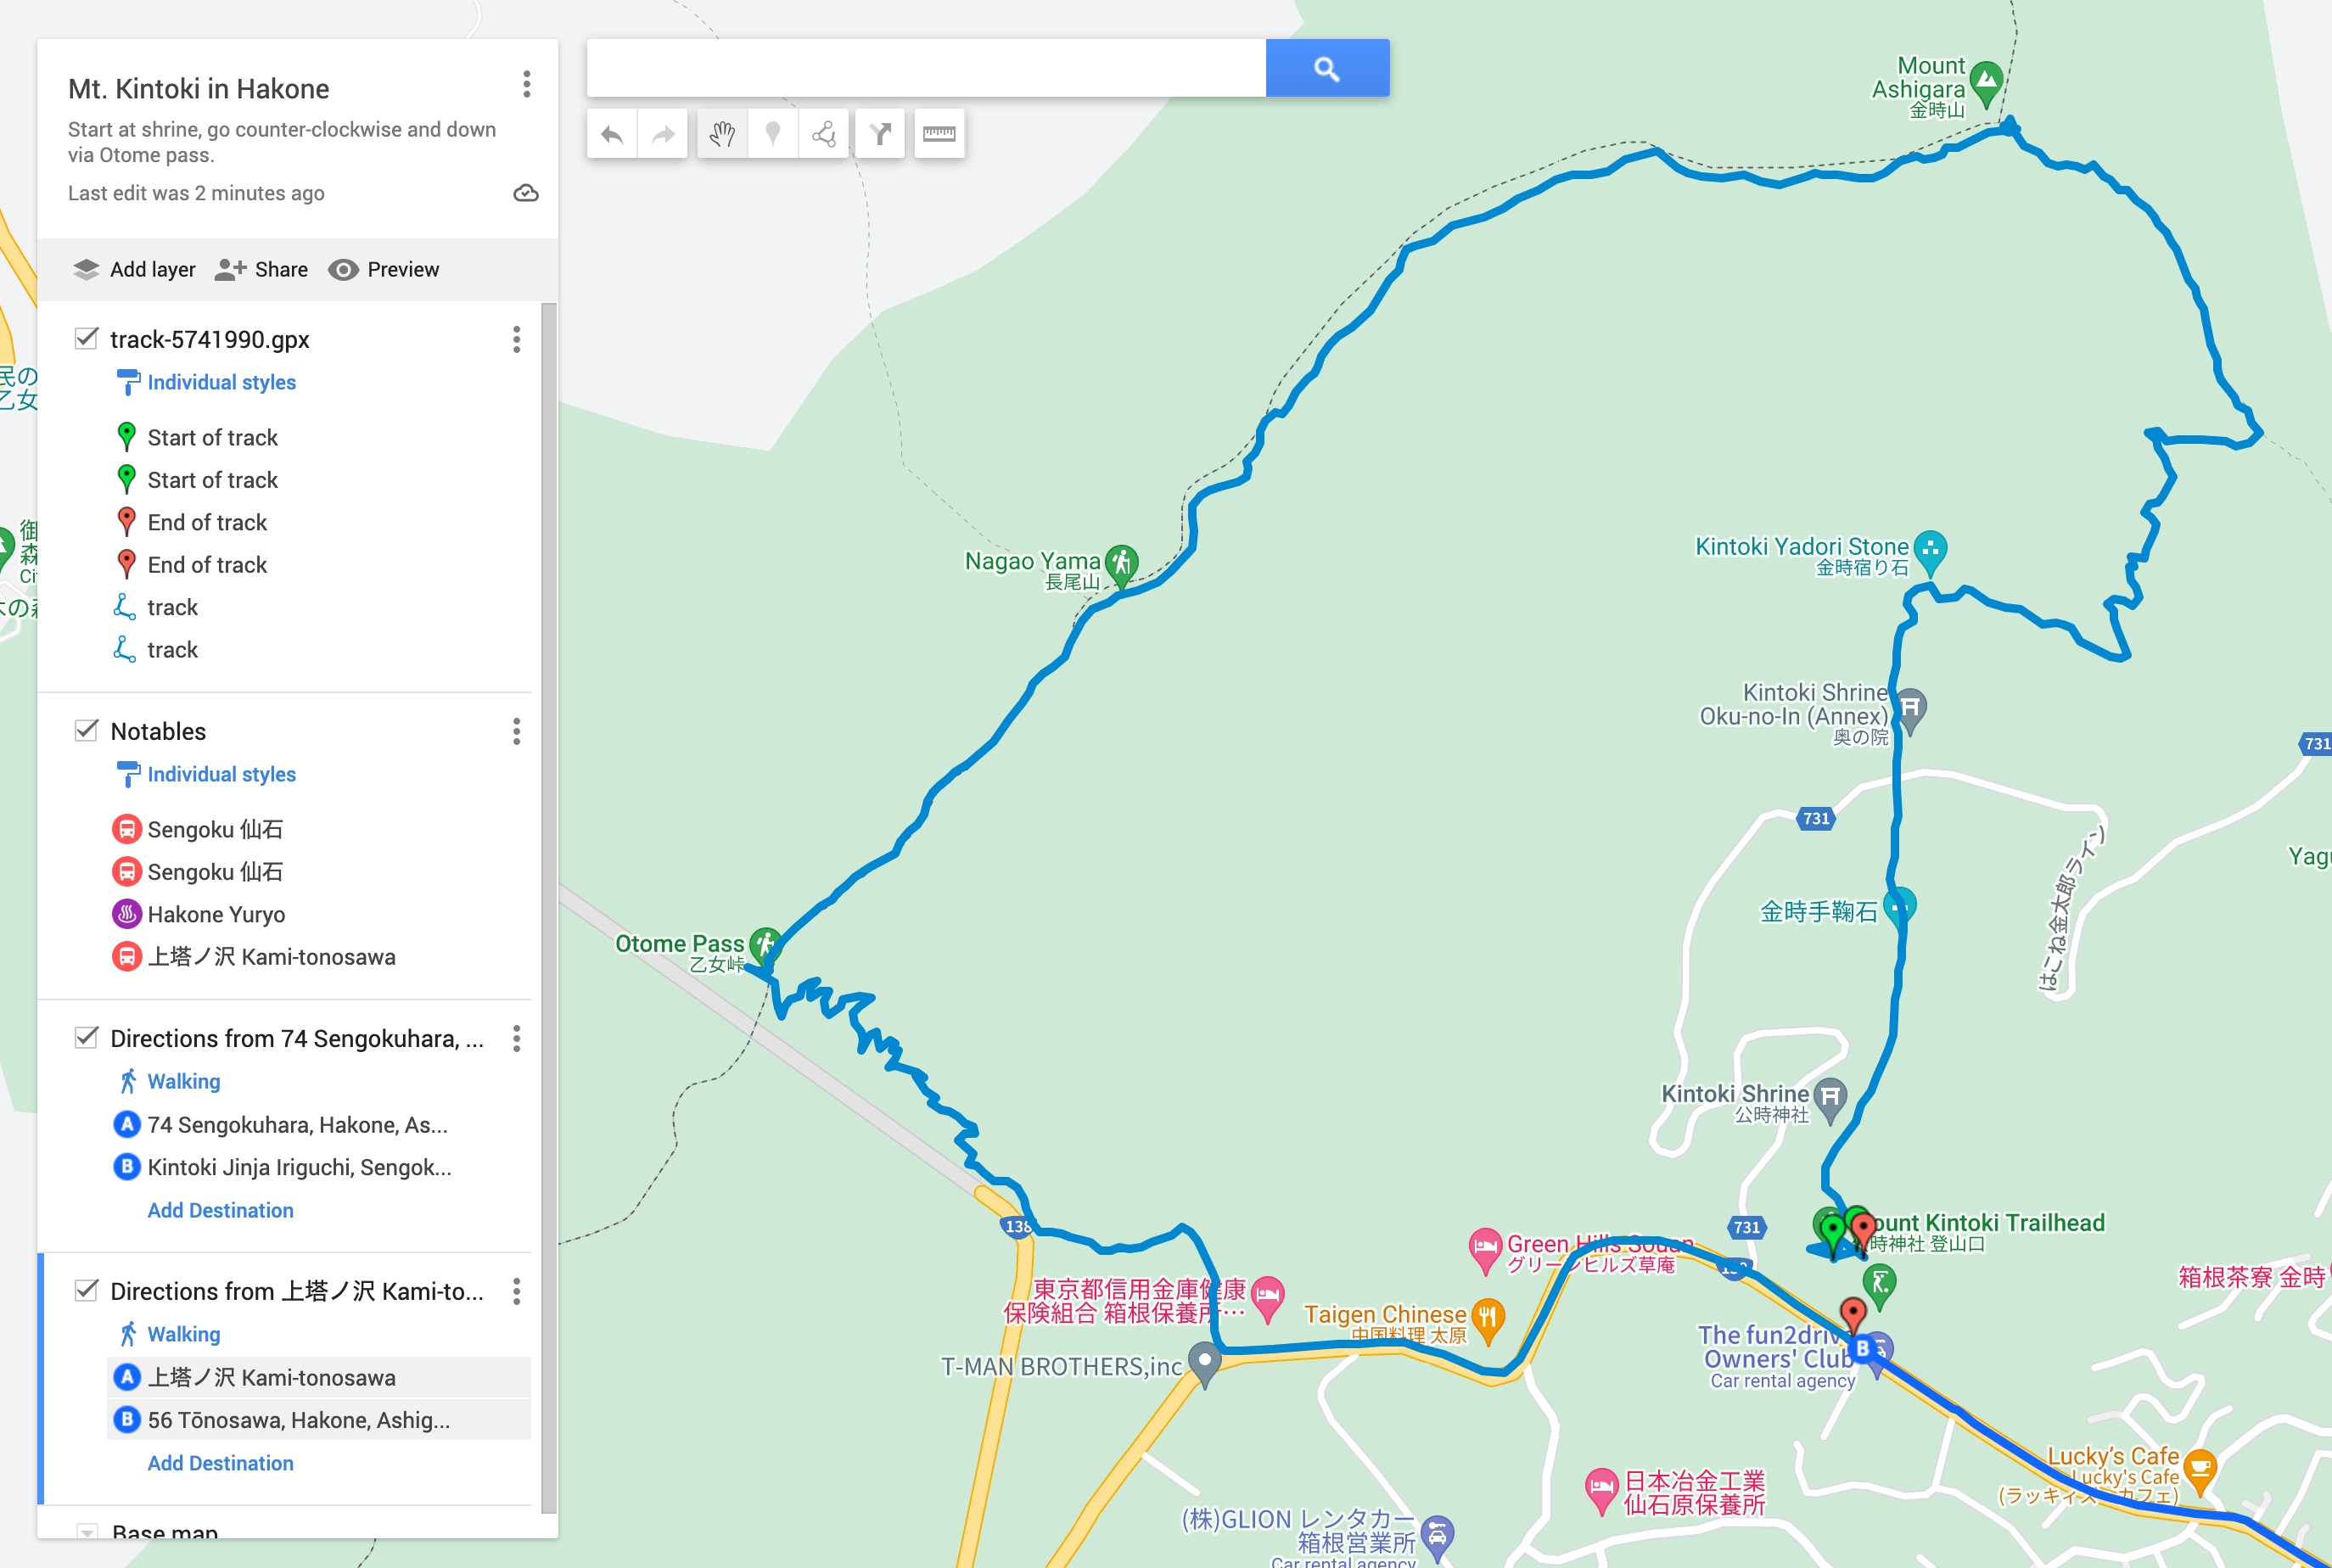 Mt. Kintoki counter-clockwise hiking route from Shrine trailhead